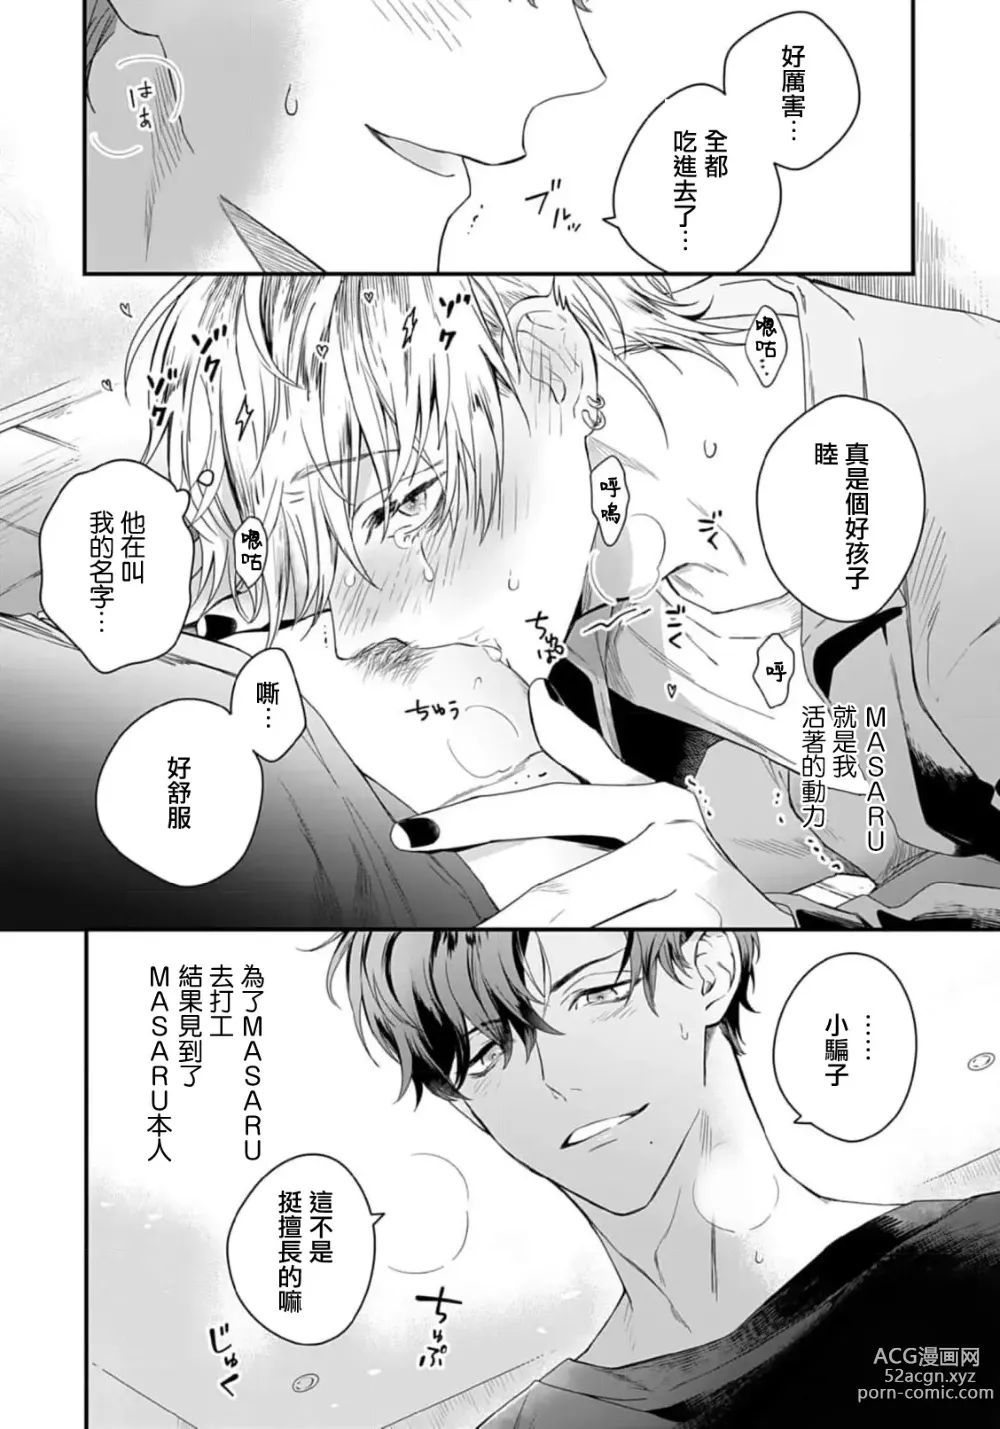 Page 20 of manga 他的声音在我听来完全就是爱之歌 1-3